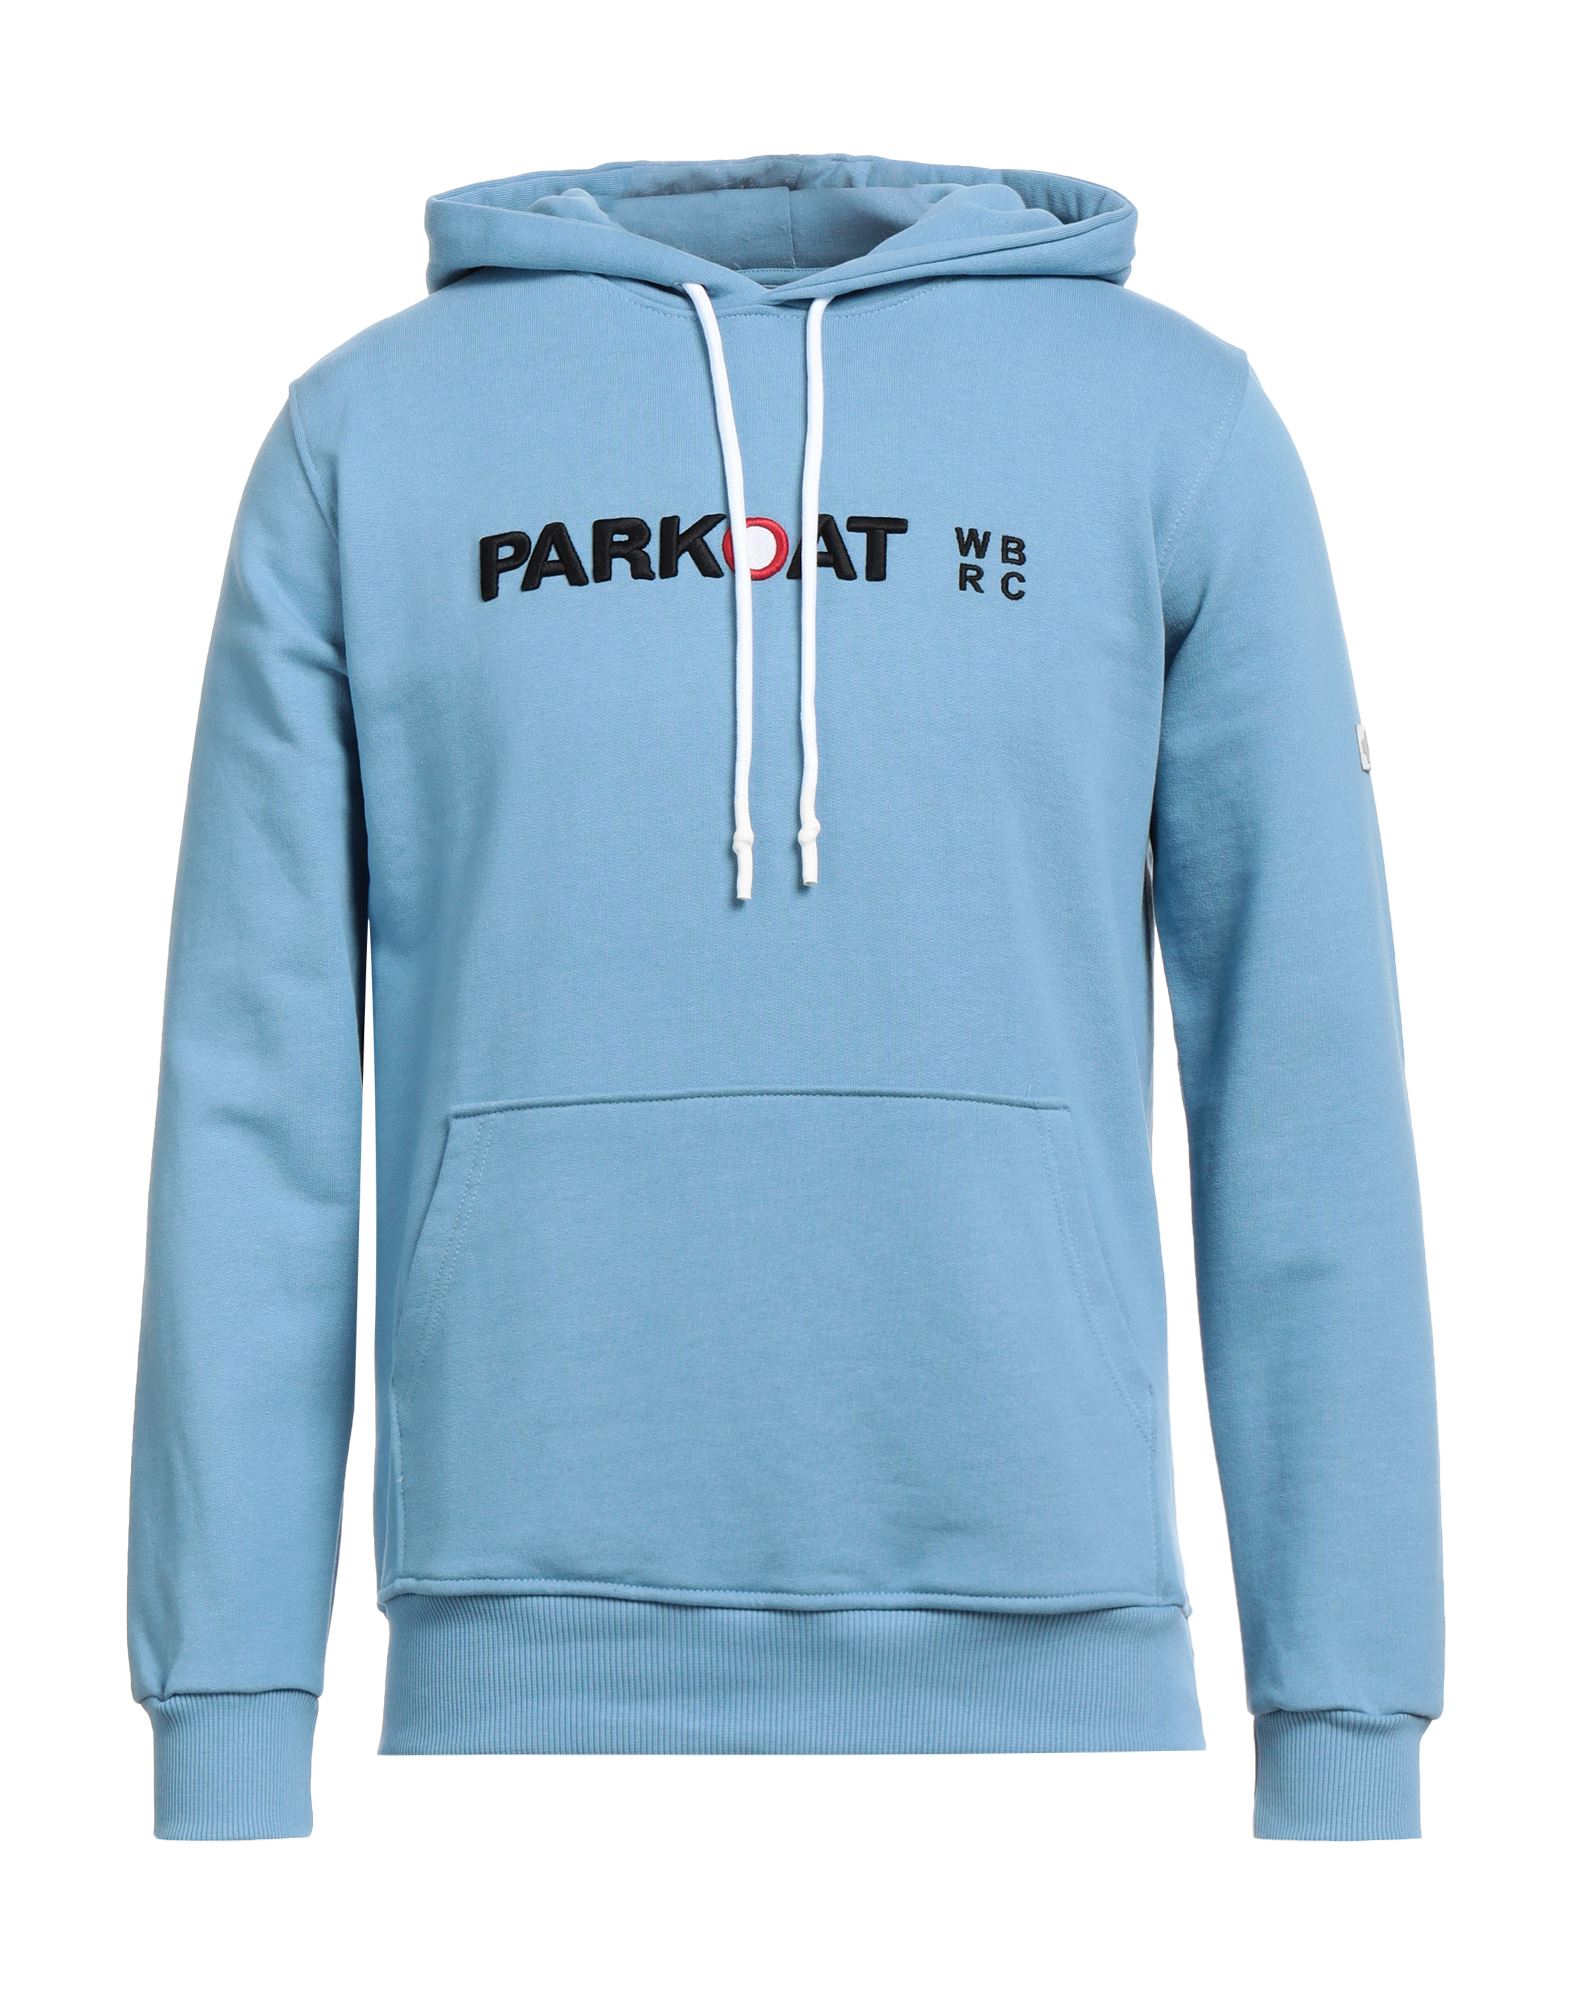 Parkoat Sweatshirts In Blue